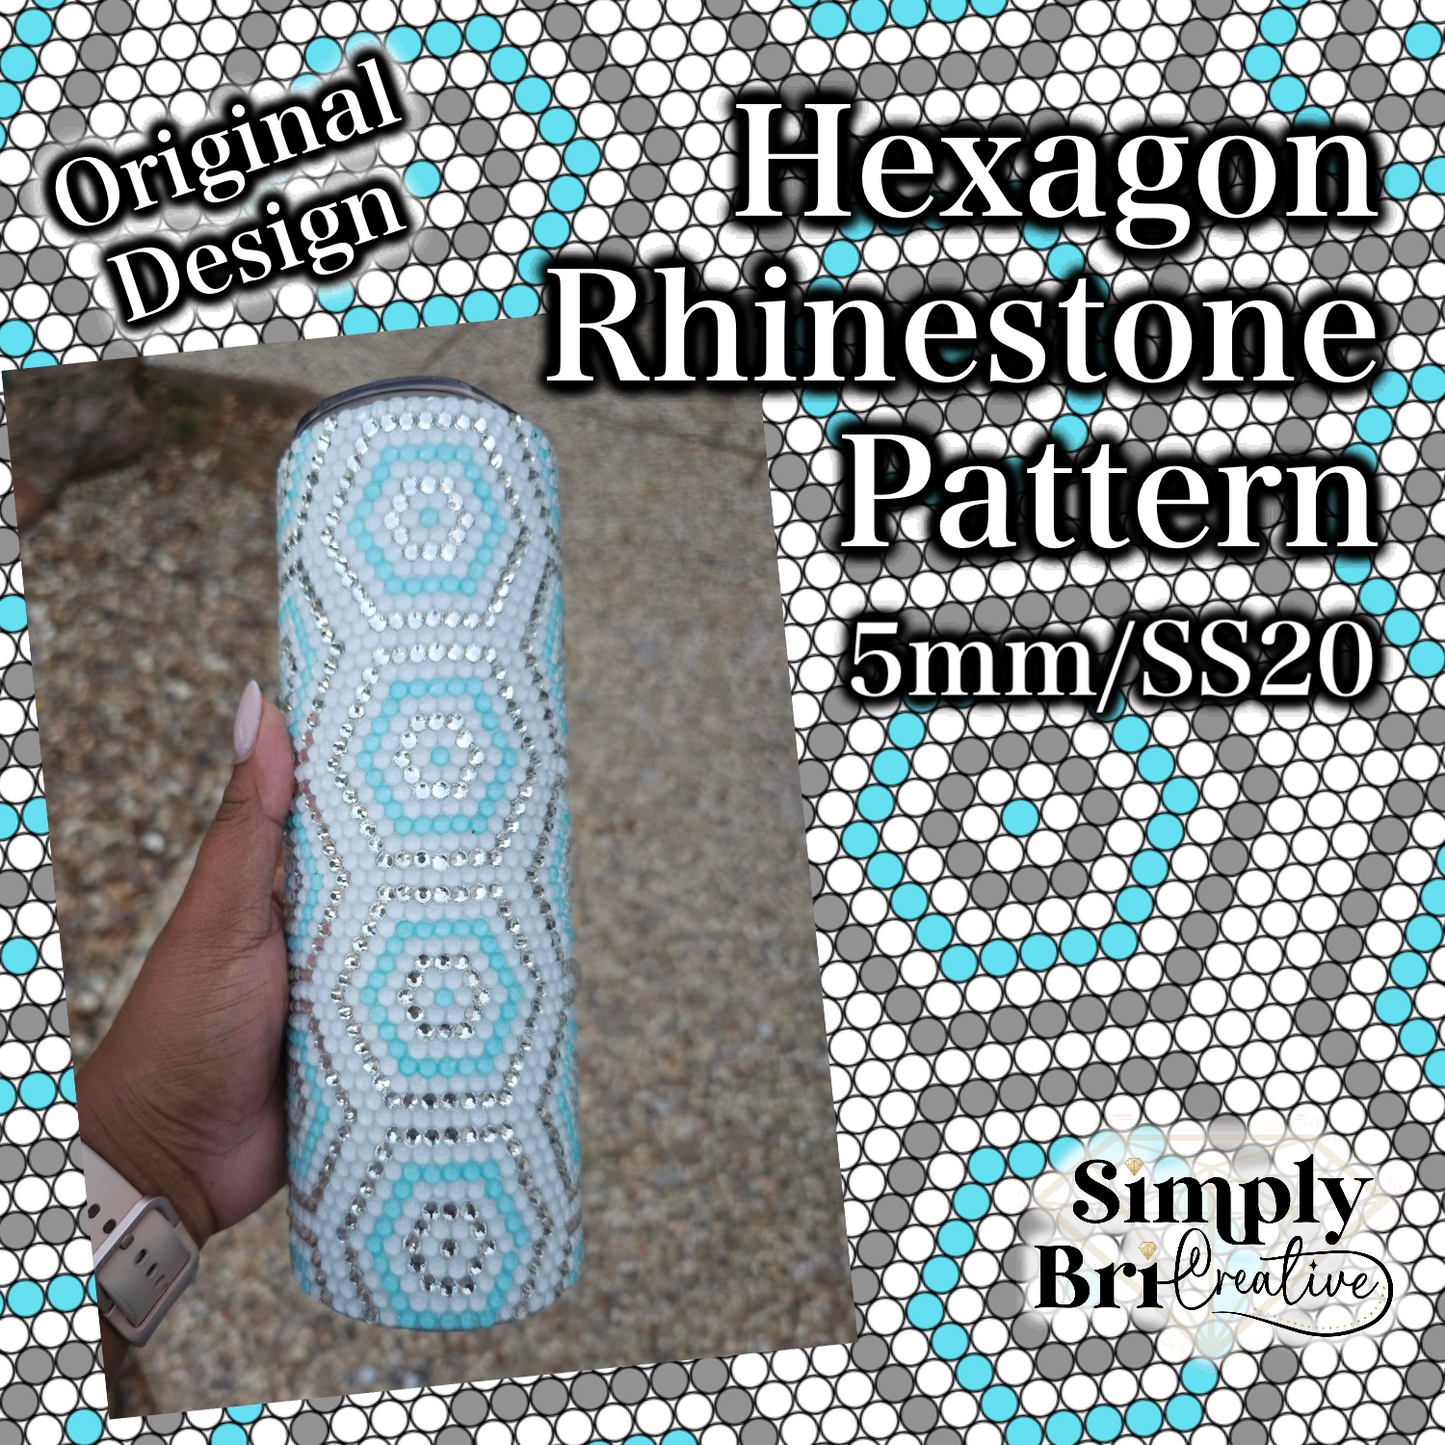 Hexagon Rhinestone Pattern (5mm/SS20)